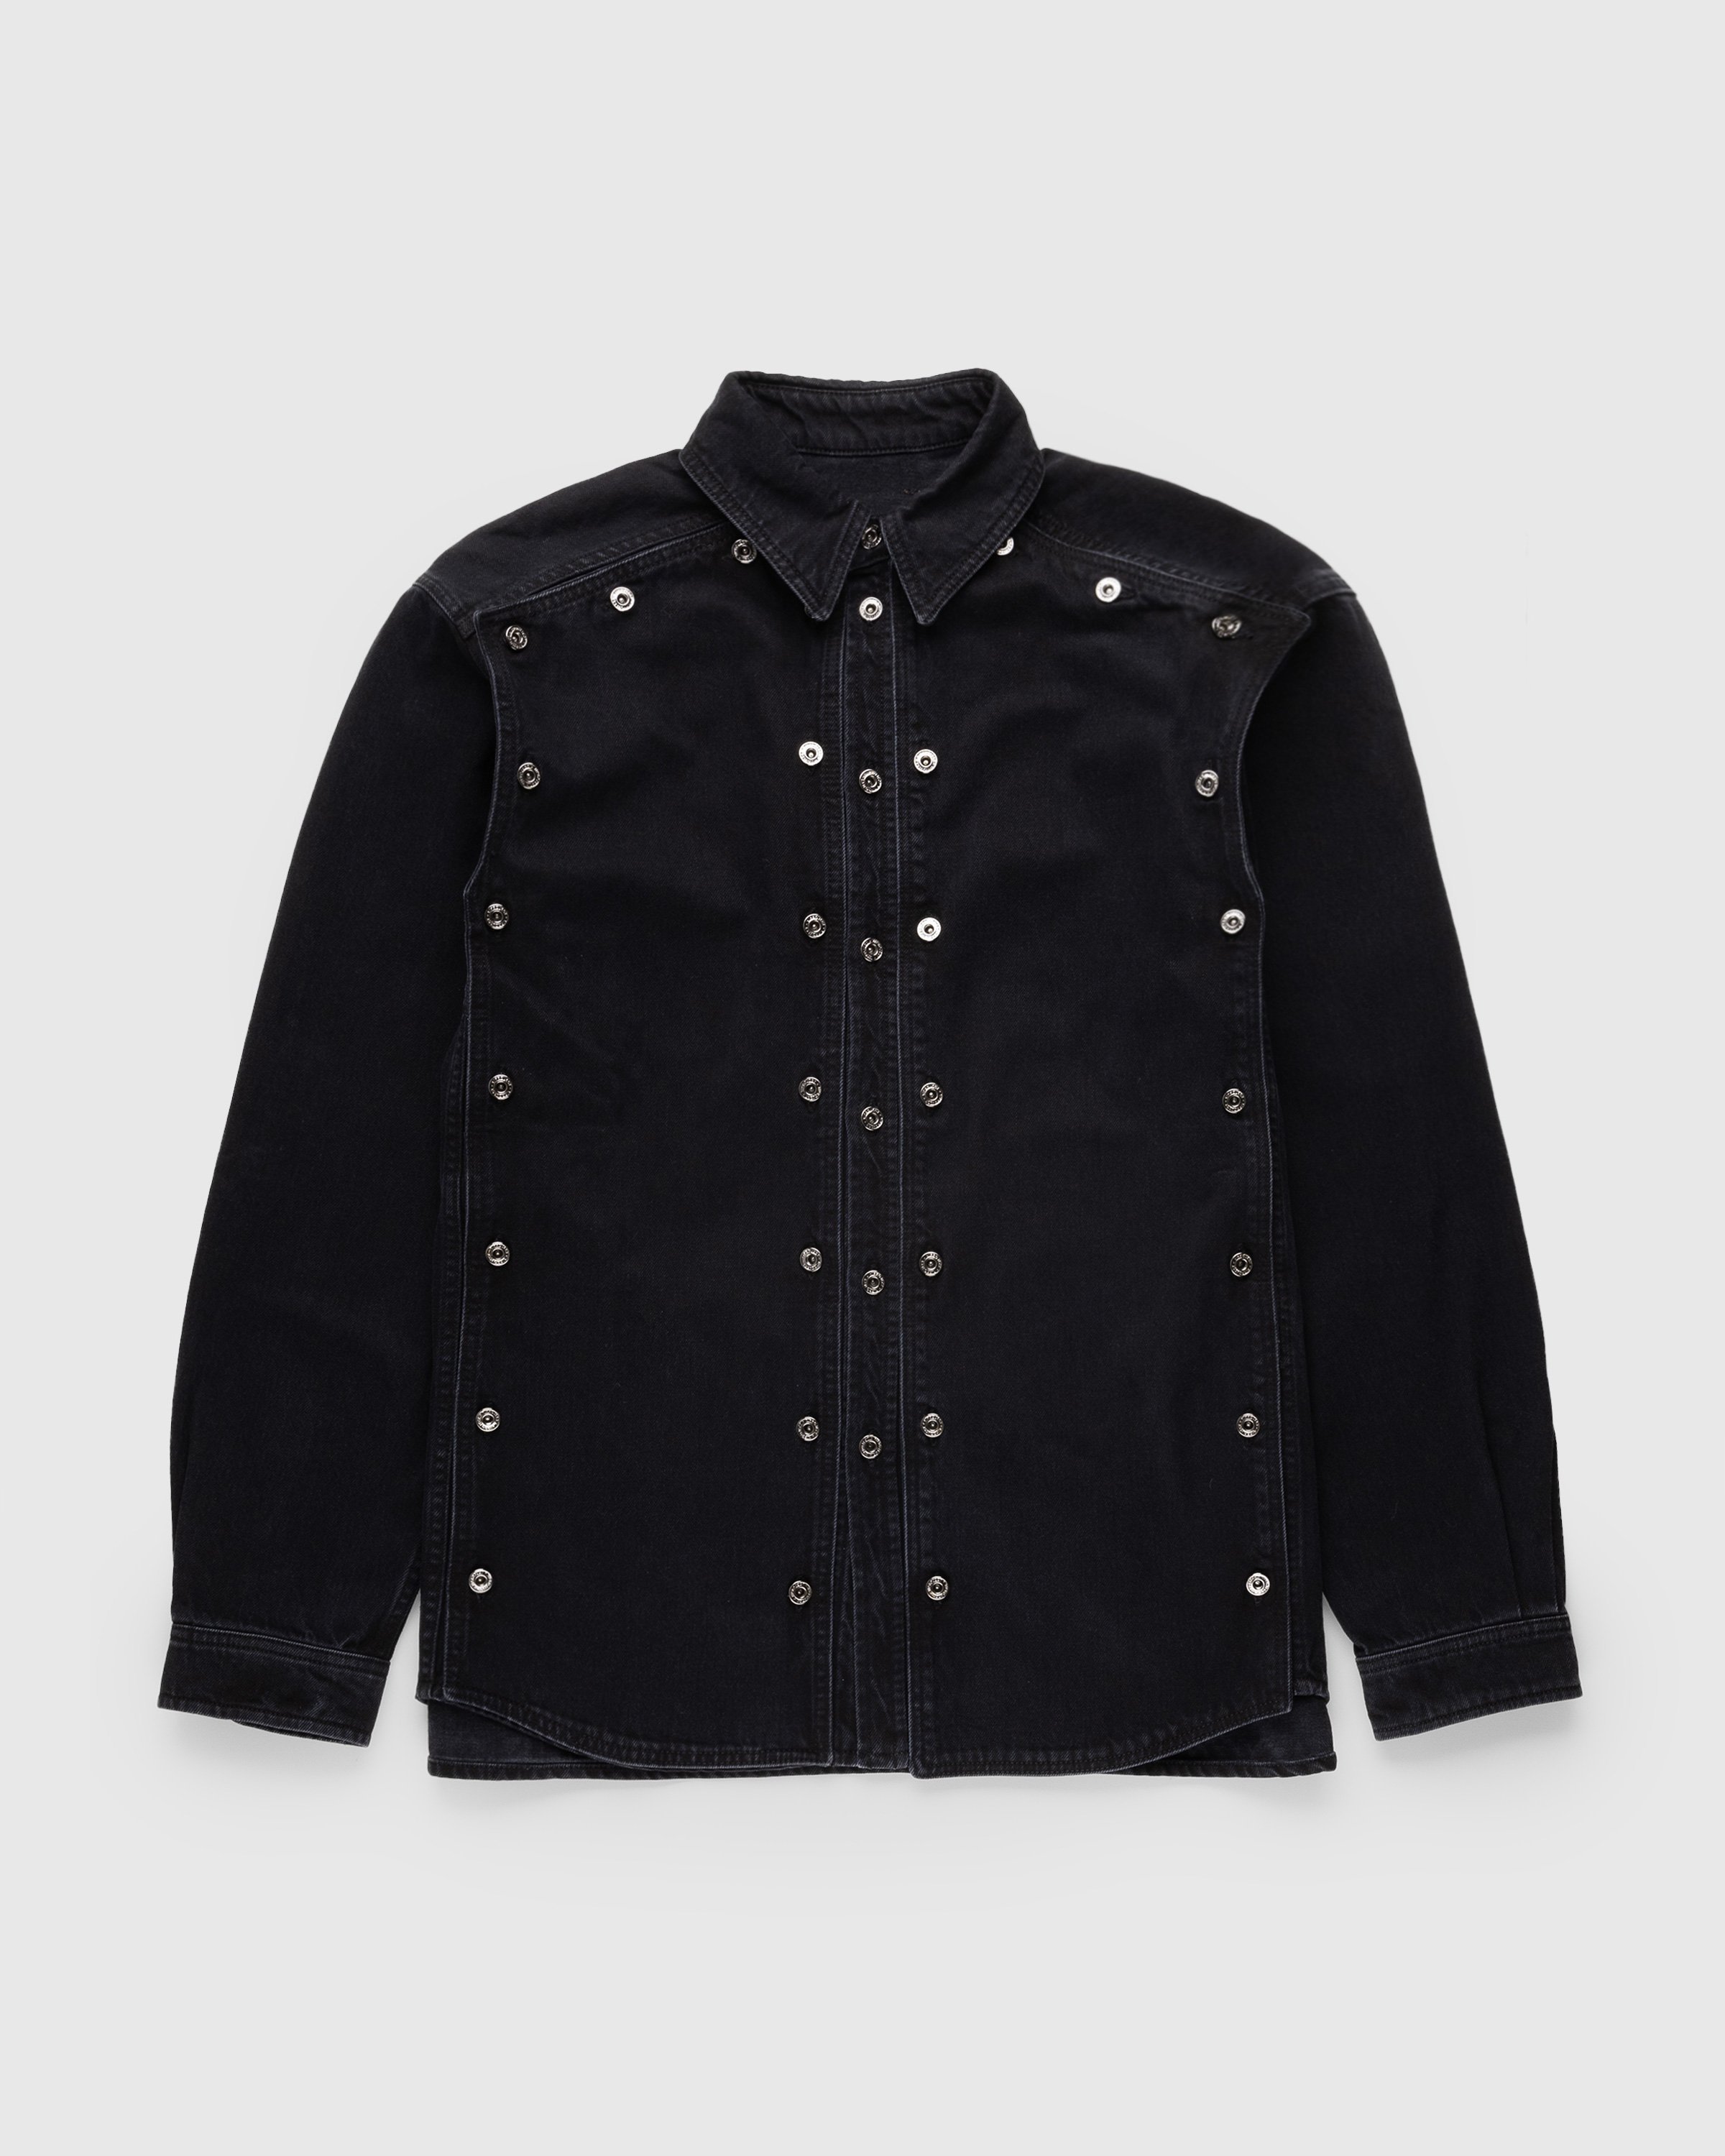 Y/Project – Evergreen Snap Off Denim Shirt Black | Highsnobiety Shop